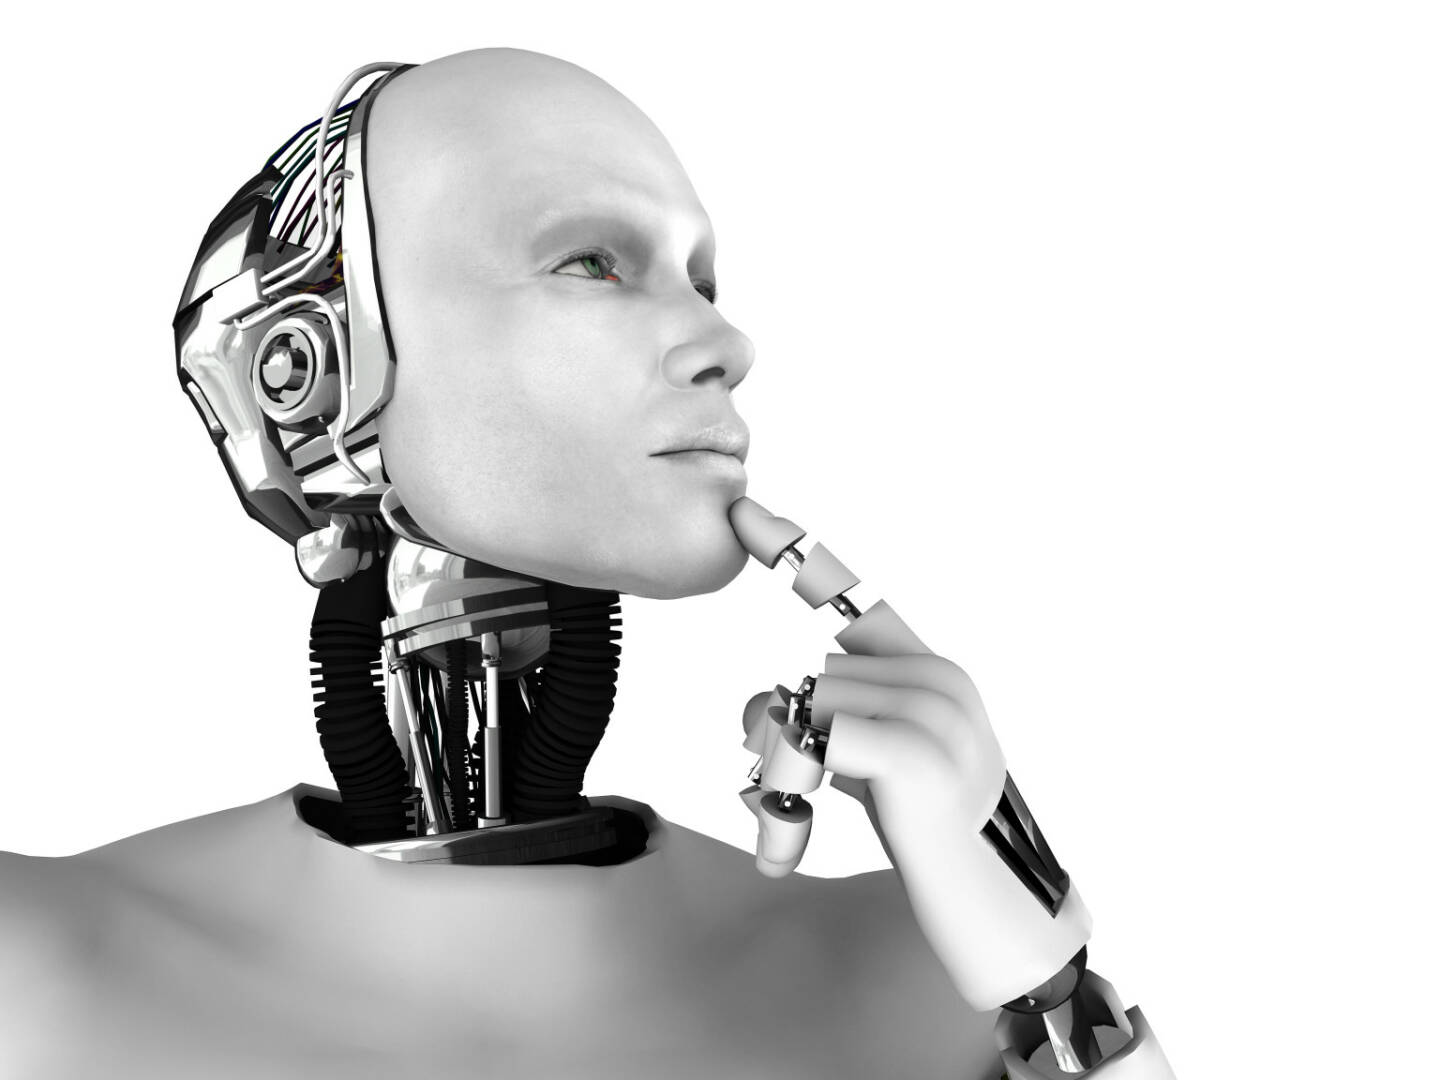 Roboter, weiß, nachdenklich - https://de.depositphotos.com/5285113/stock-photo-male-robot-thinking-about-something.html